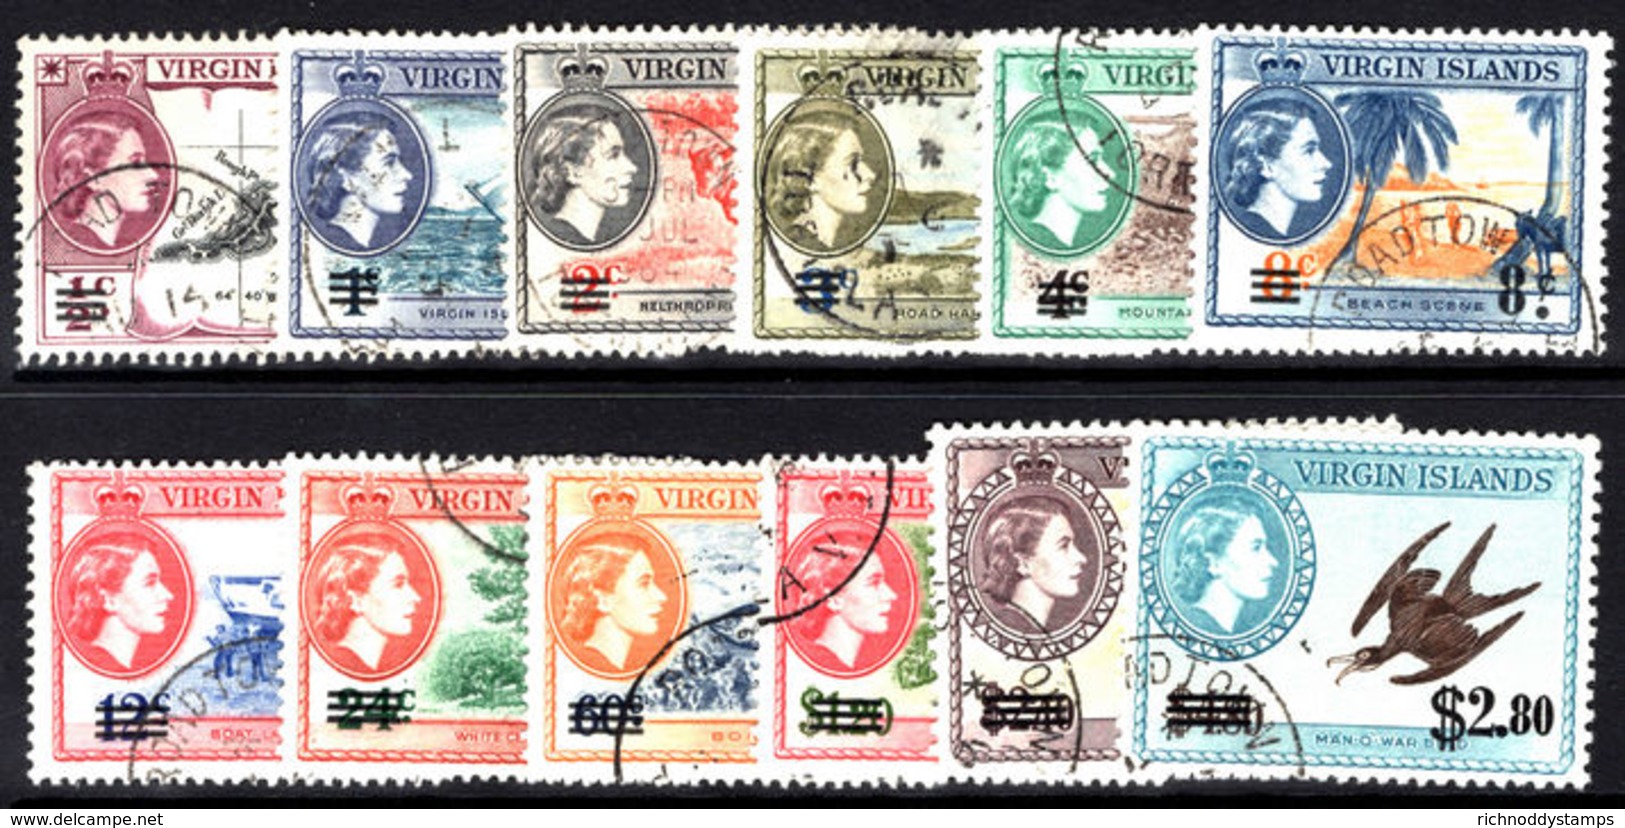 British Virgin Islands 1962 New Currency Set Fine Used. - British Virgin Islands